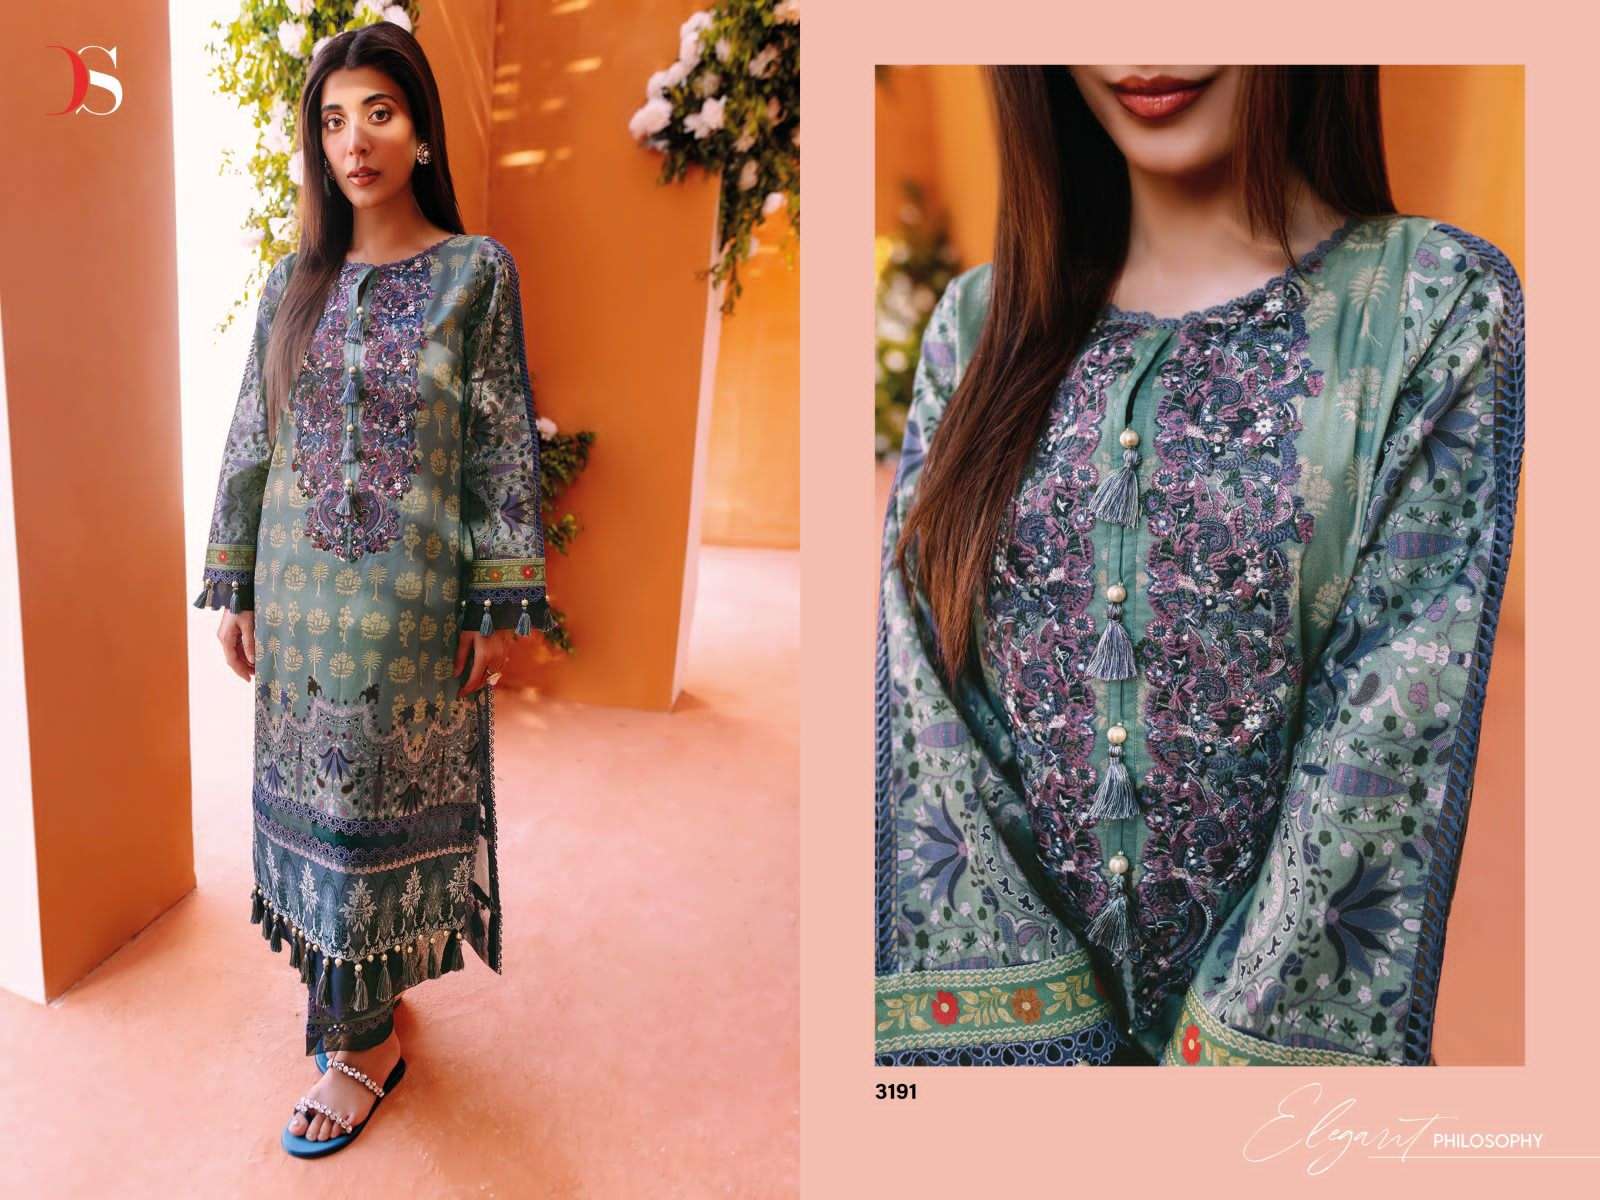 Deepsy Jade Solitarite Vol 23 Chiffon Dupatta Pakistani Salwar Suits Wholesale catalog